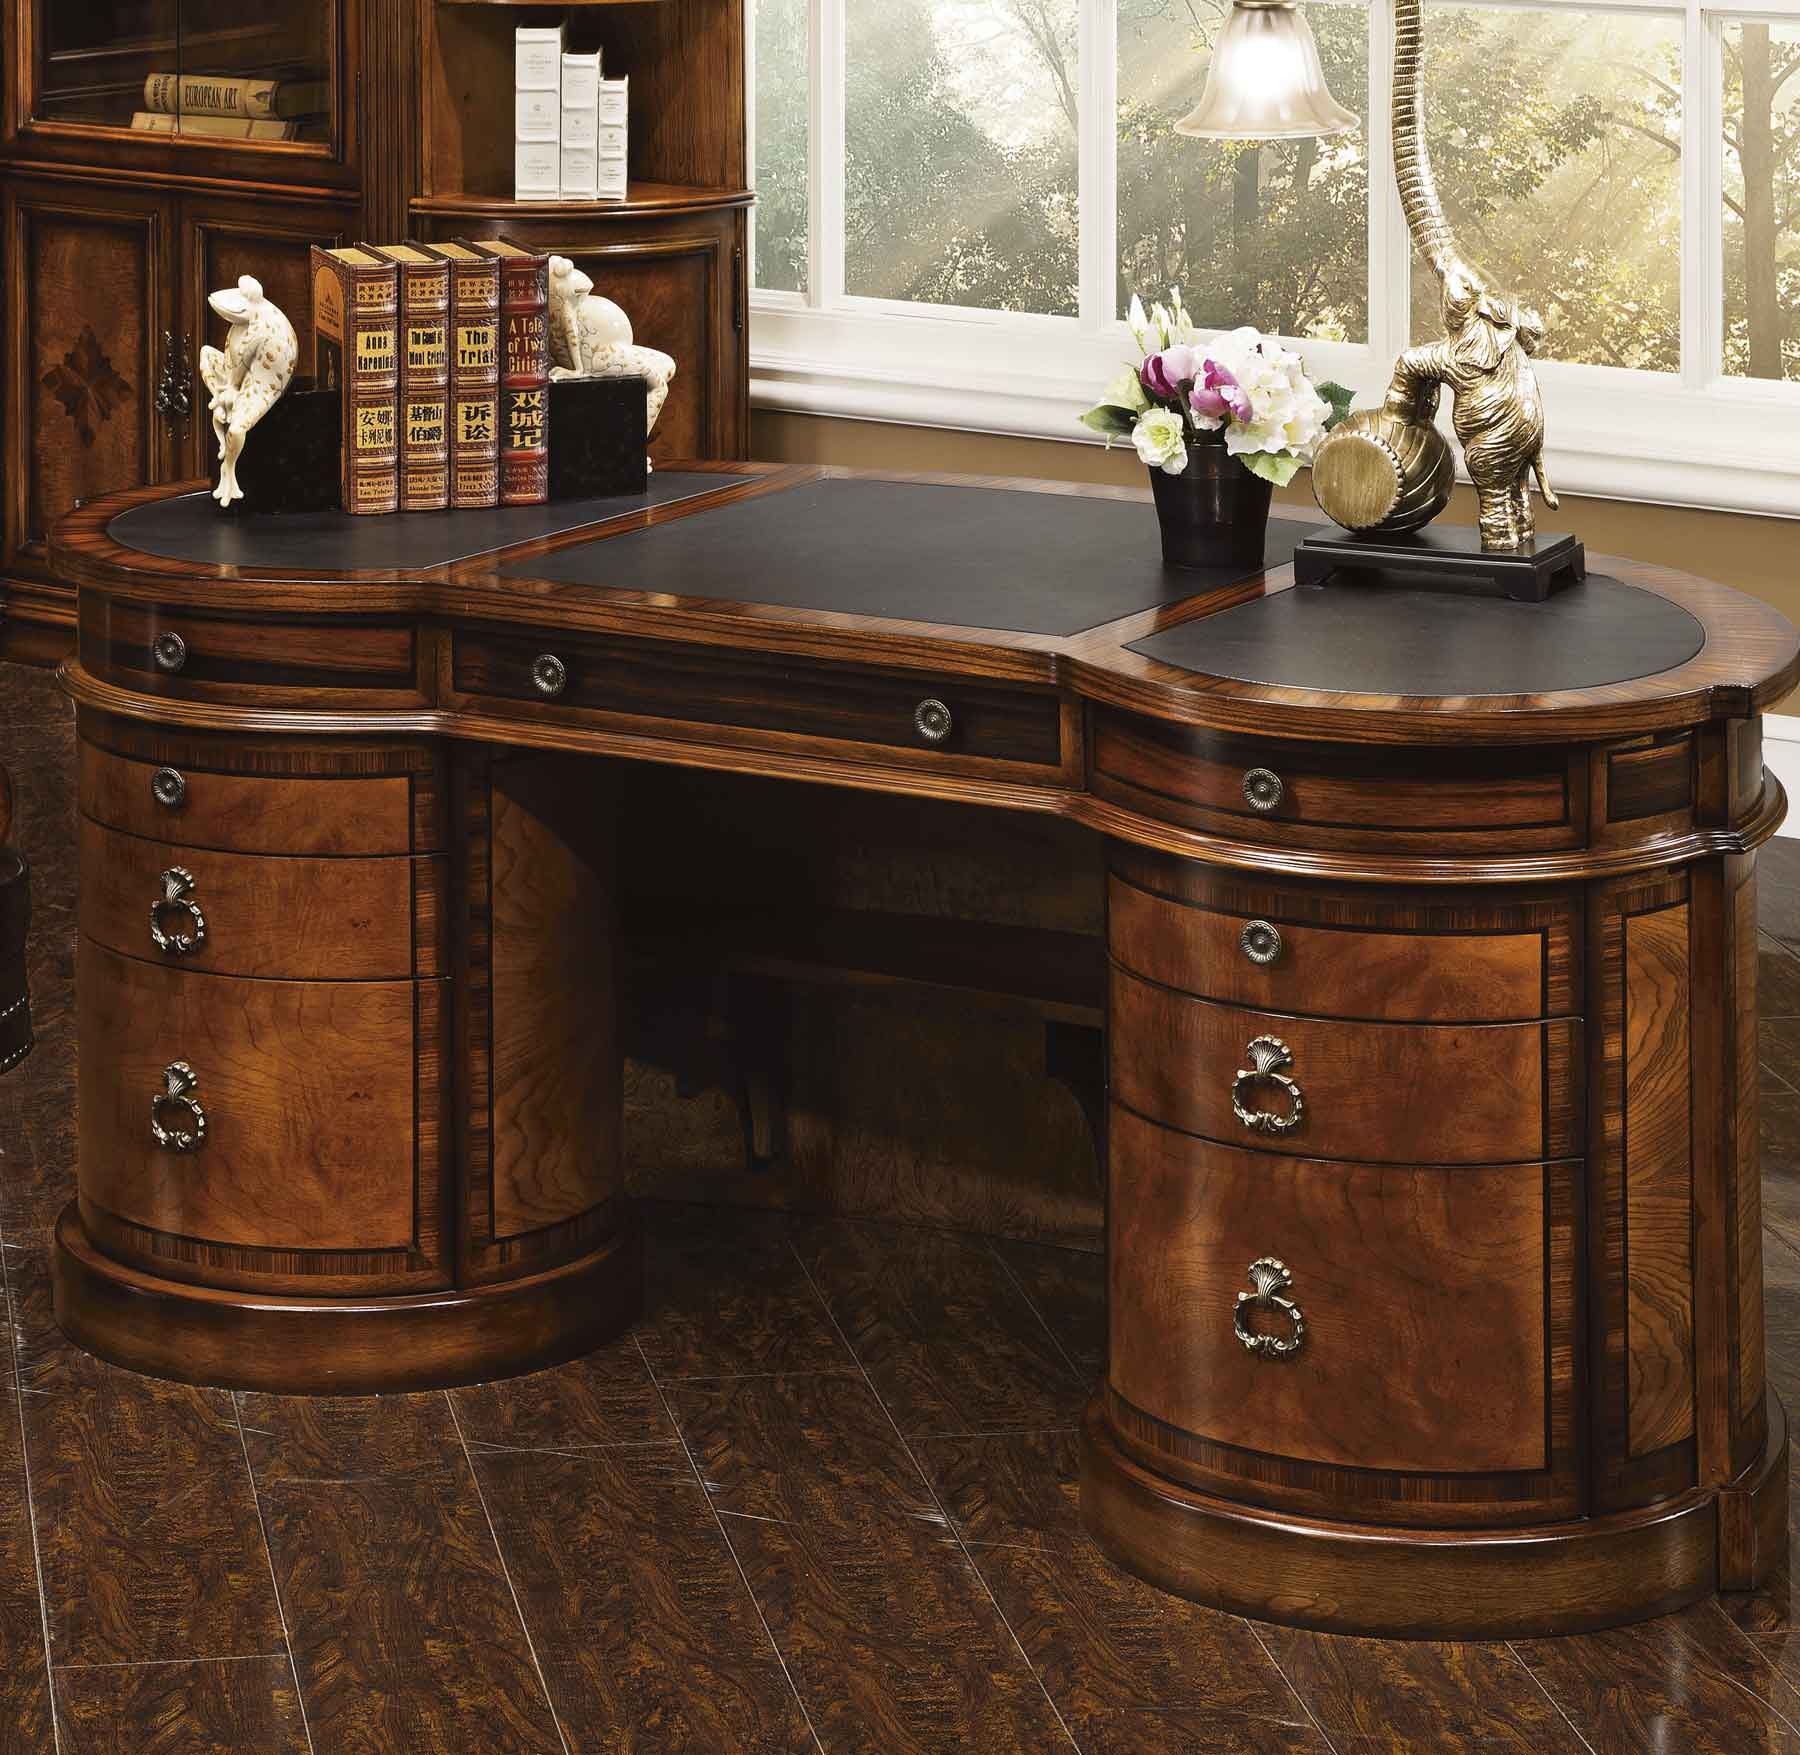 Eton Executive Desk shown in Antique Cognac finish